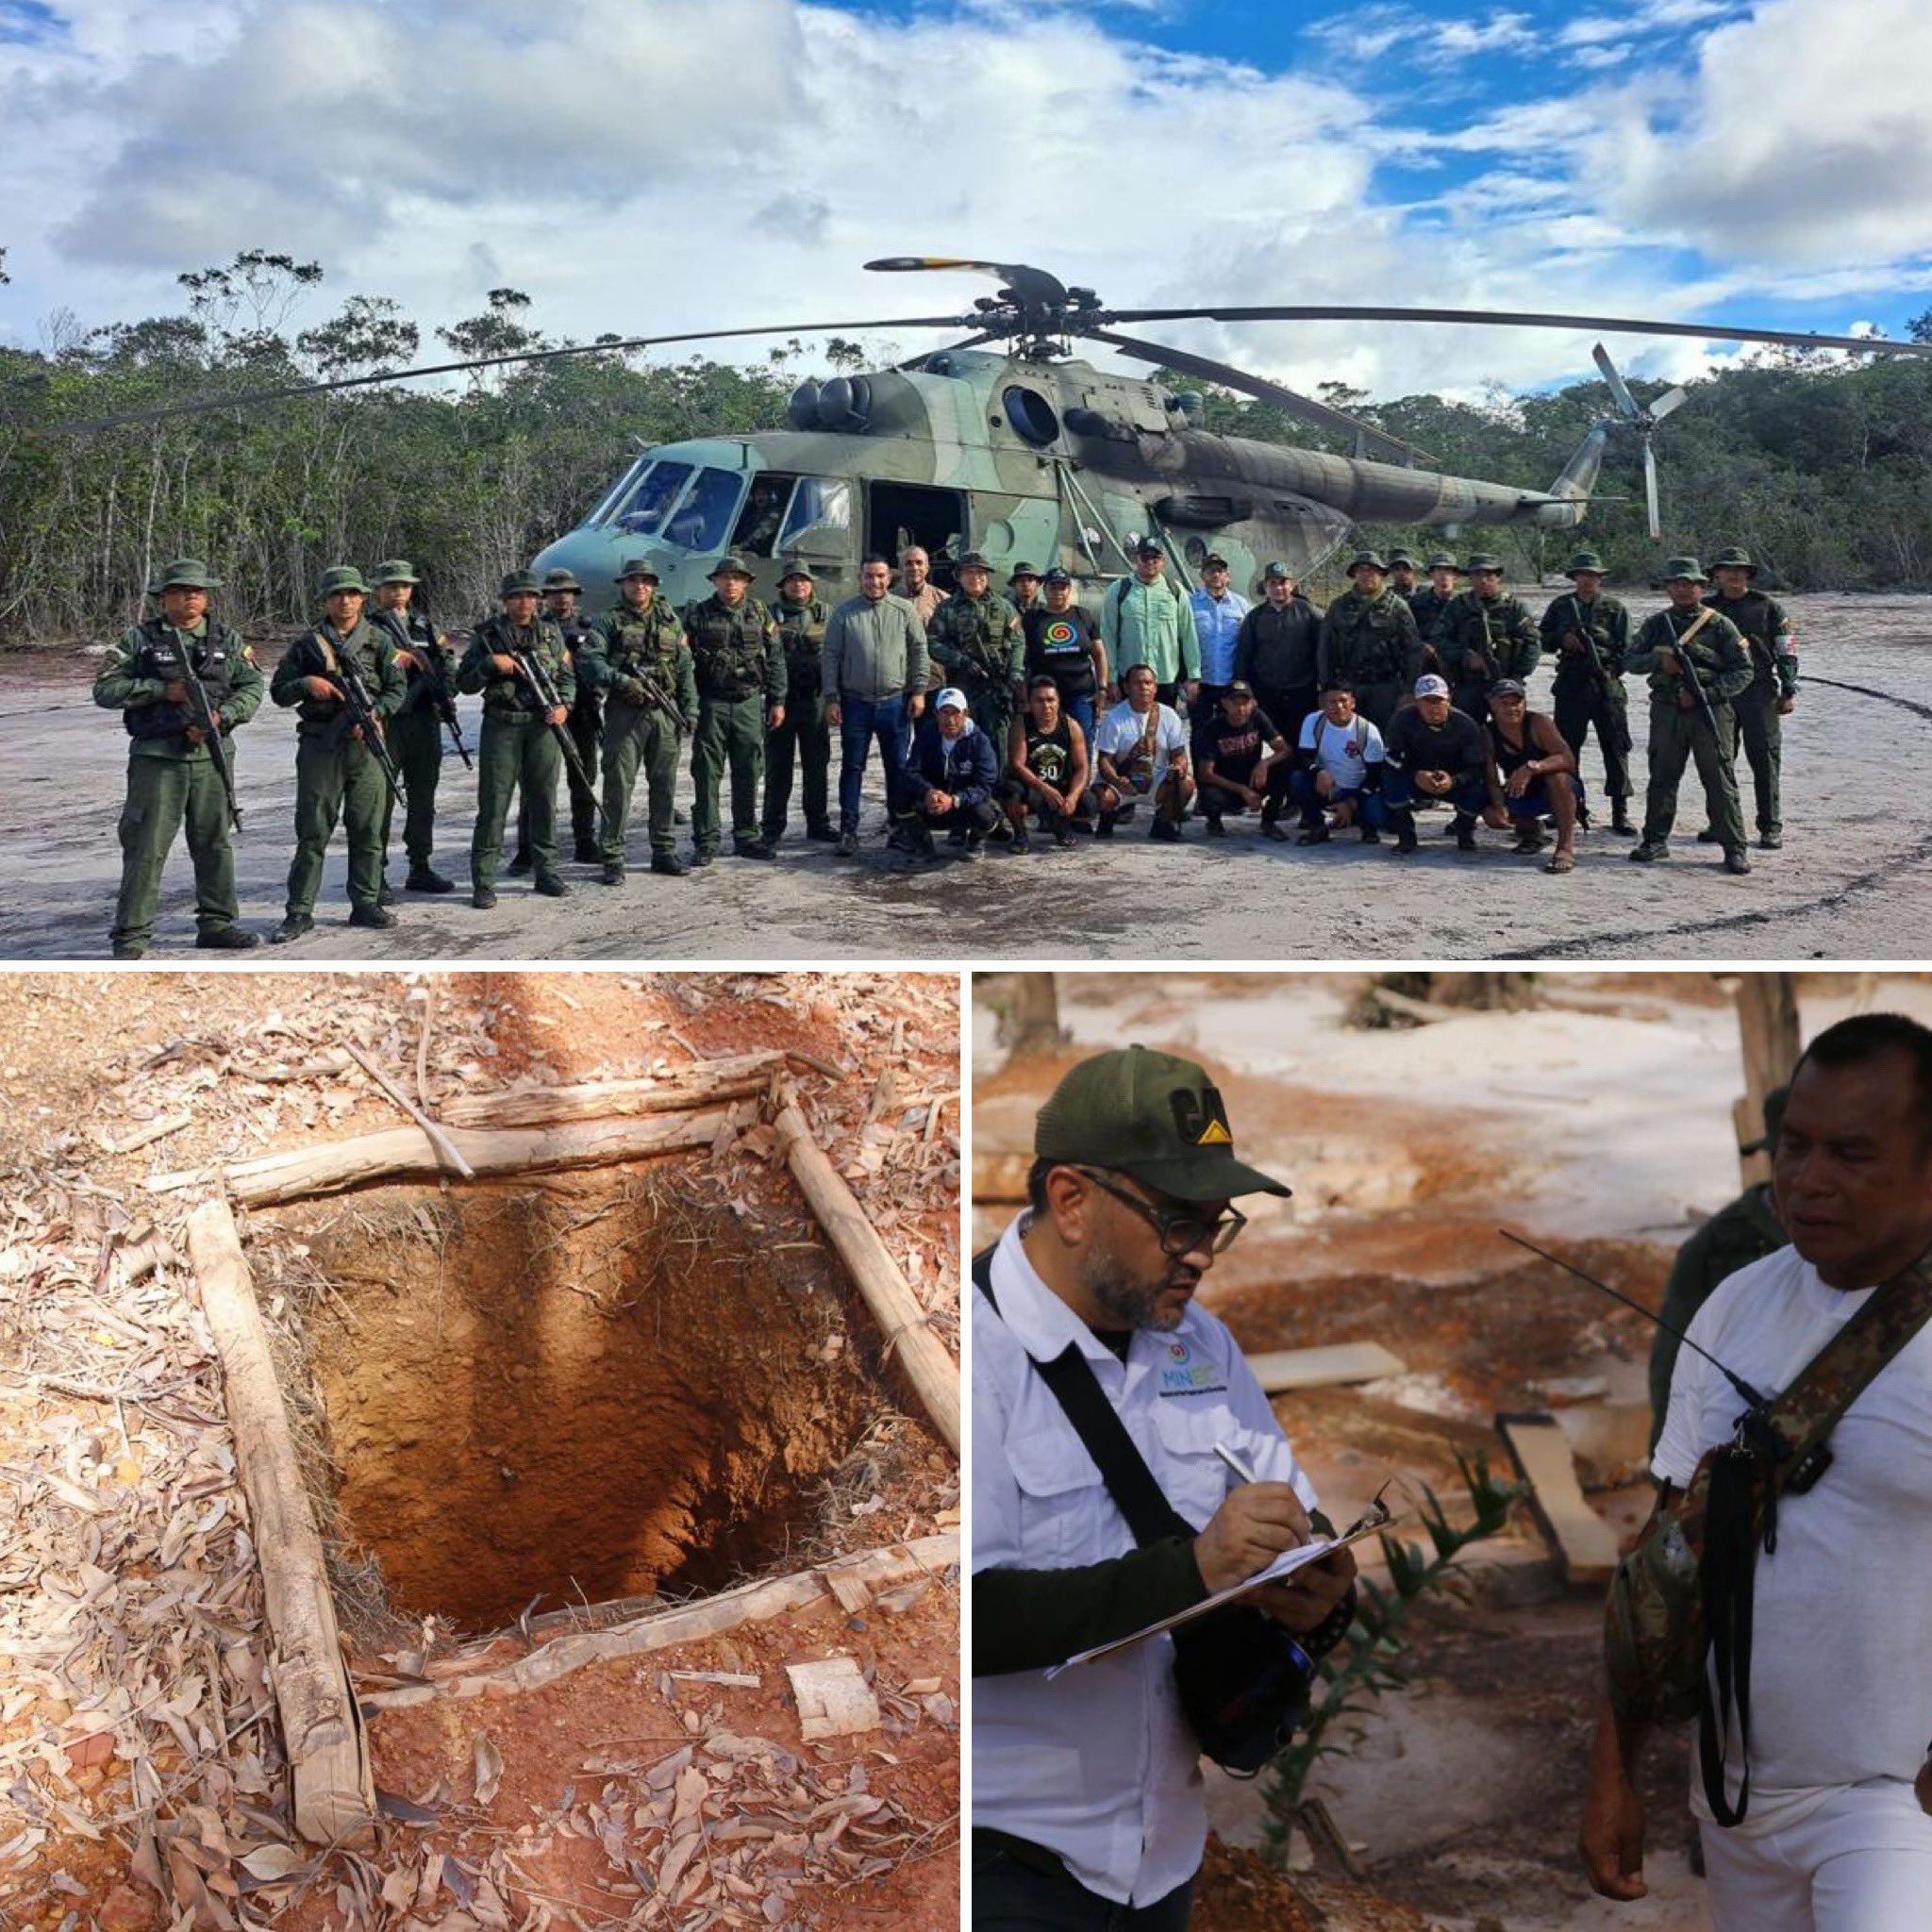 Fanb comenzó a “reforestar” la mina ilegal “Bulla Loca” colapsada en febrero en Bolívar